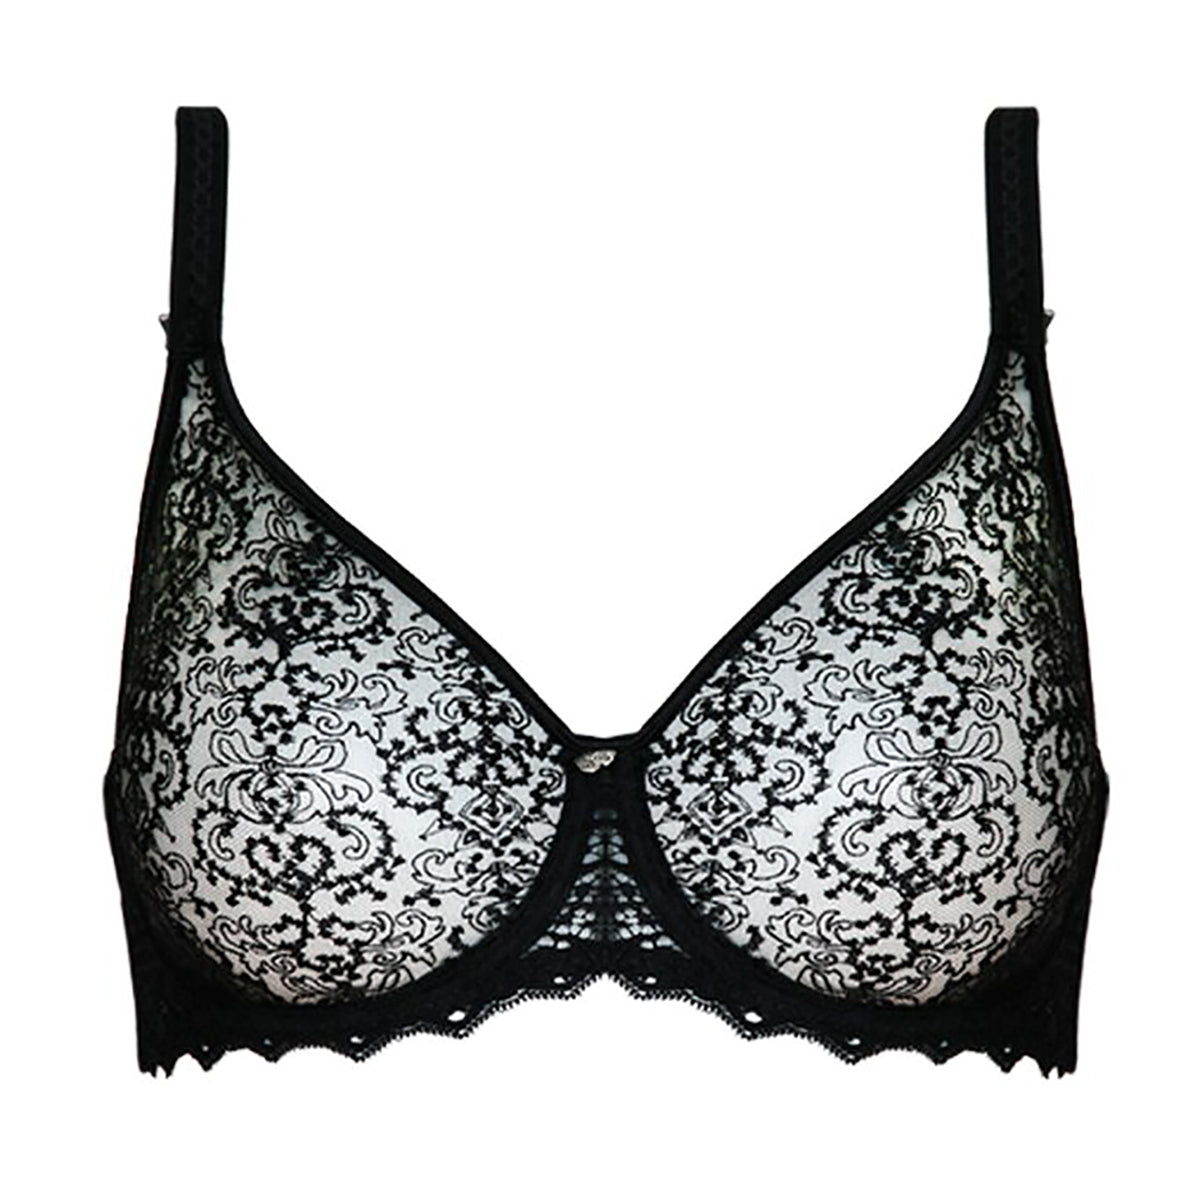 Empreinte cassiopee lace bra in black how should a bra fit french lingerie canada linea intima